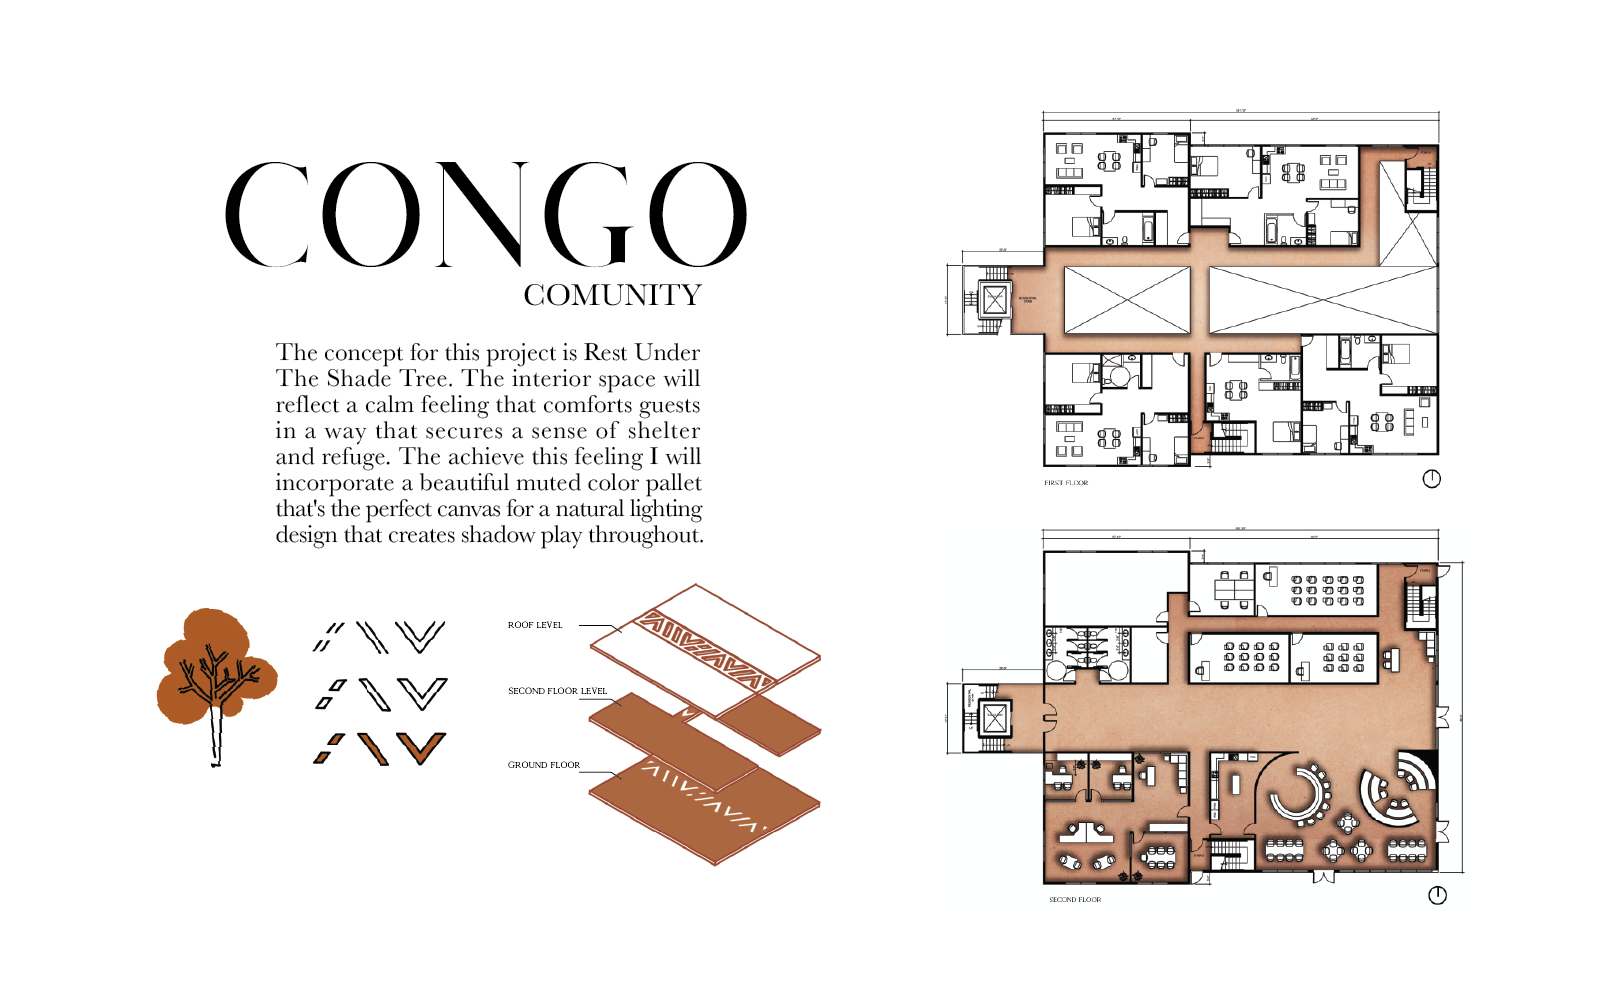 Congo Community Concept